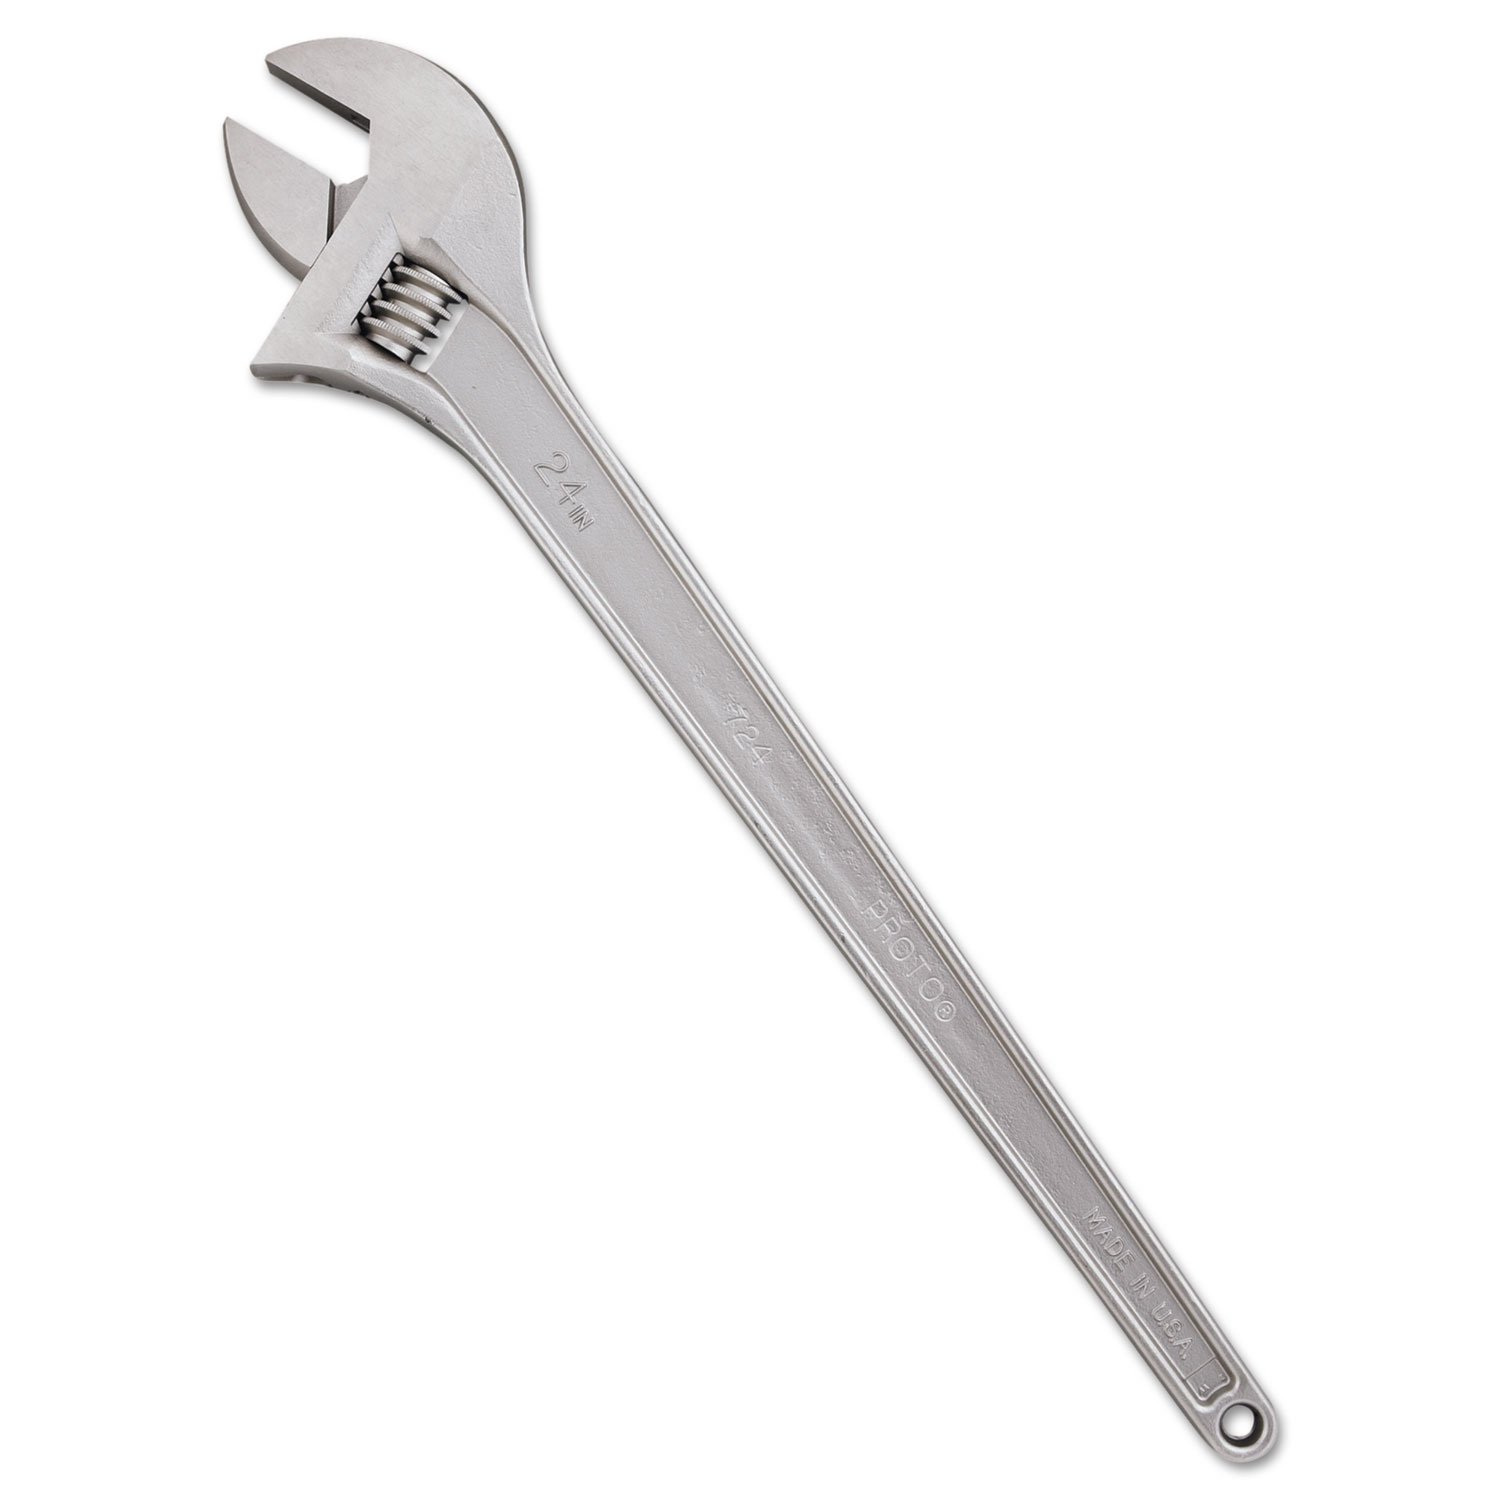 PROTO Adjustable Wrench, 24 Long, 2 7/16 Opening, Satin Chrome